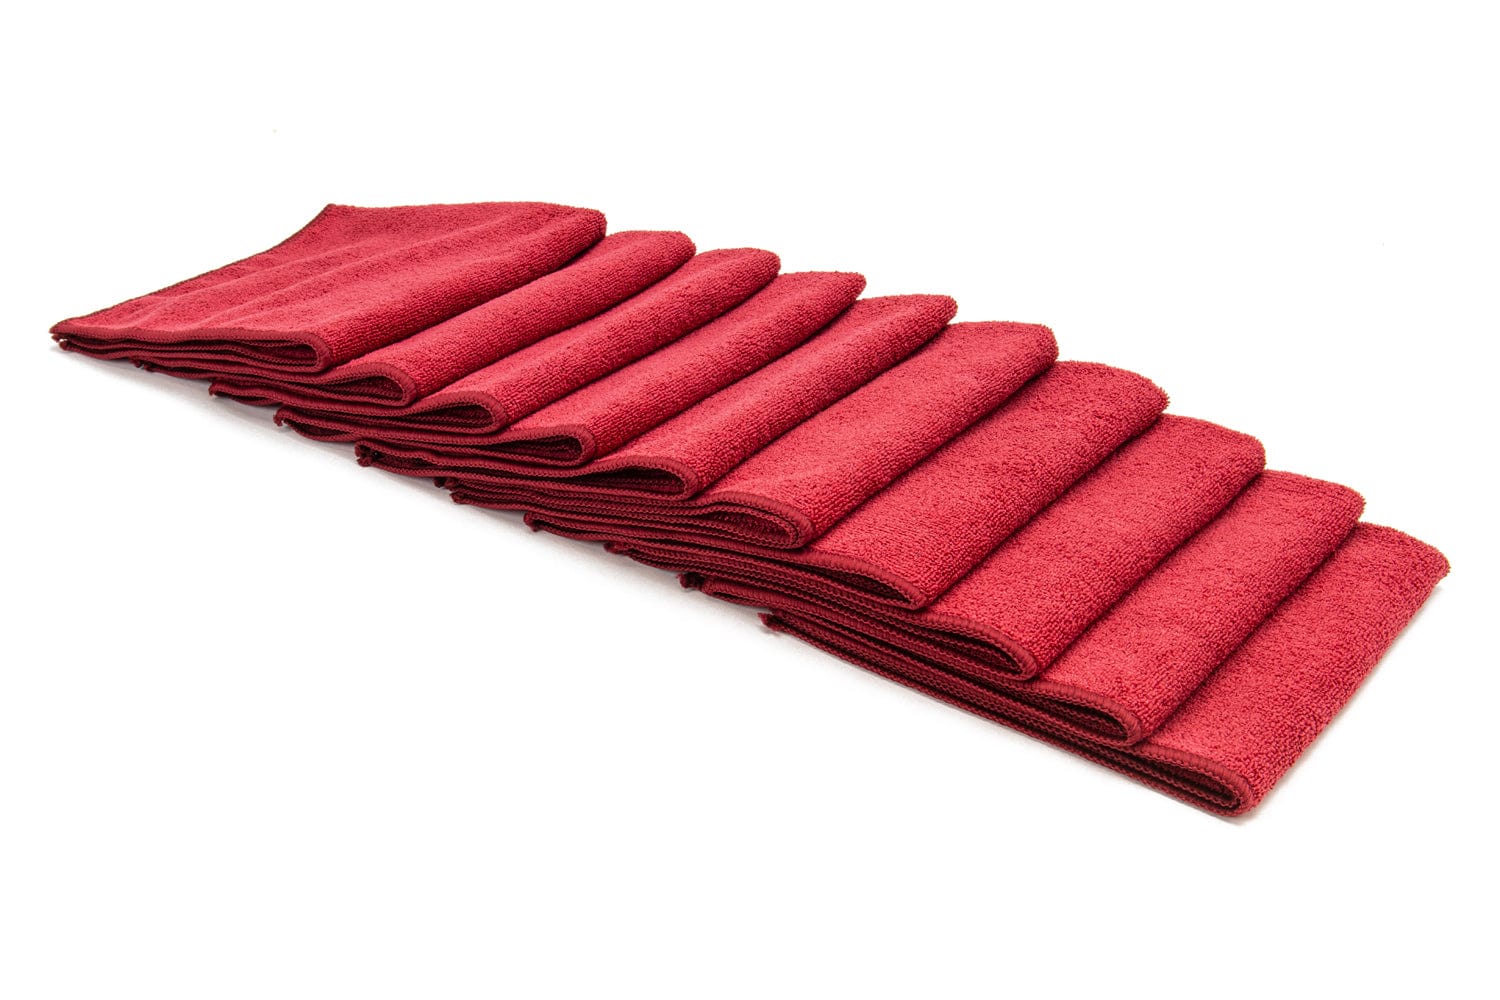 Autofiber Red / Edgeless [Utility 300] All-Purpose Edgeless Microfiber Towel (16 in x 16 in., 300 gsm) 10pack